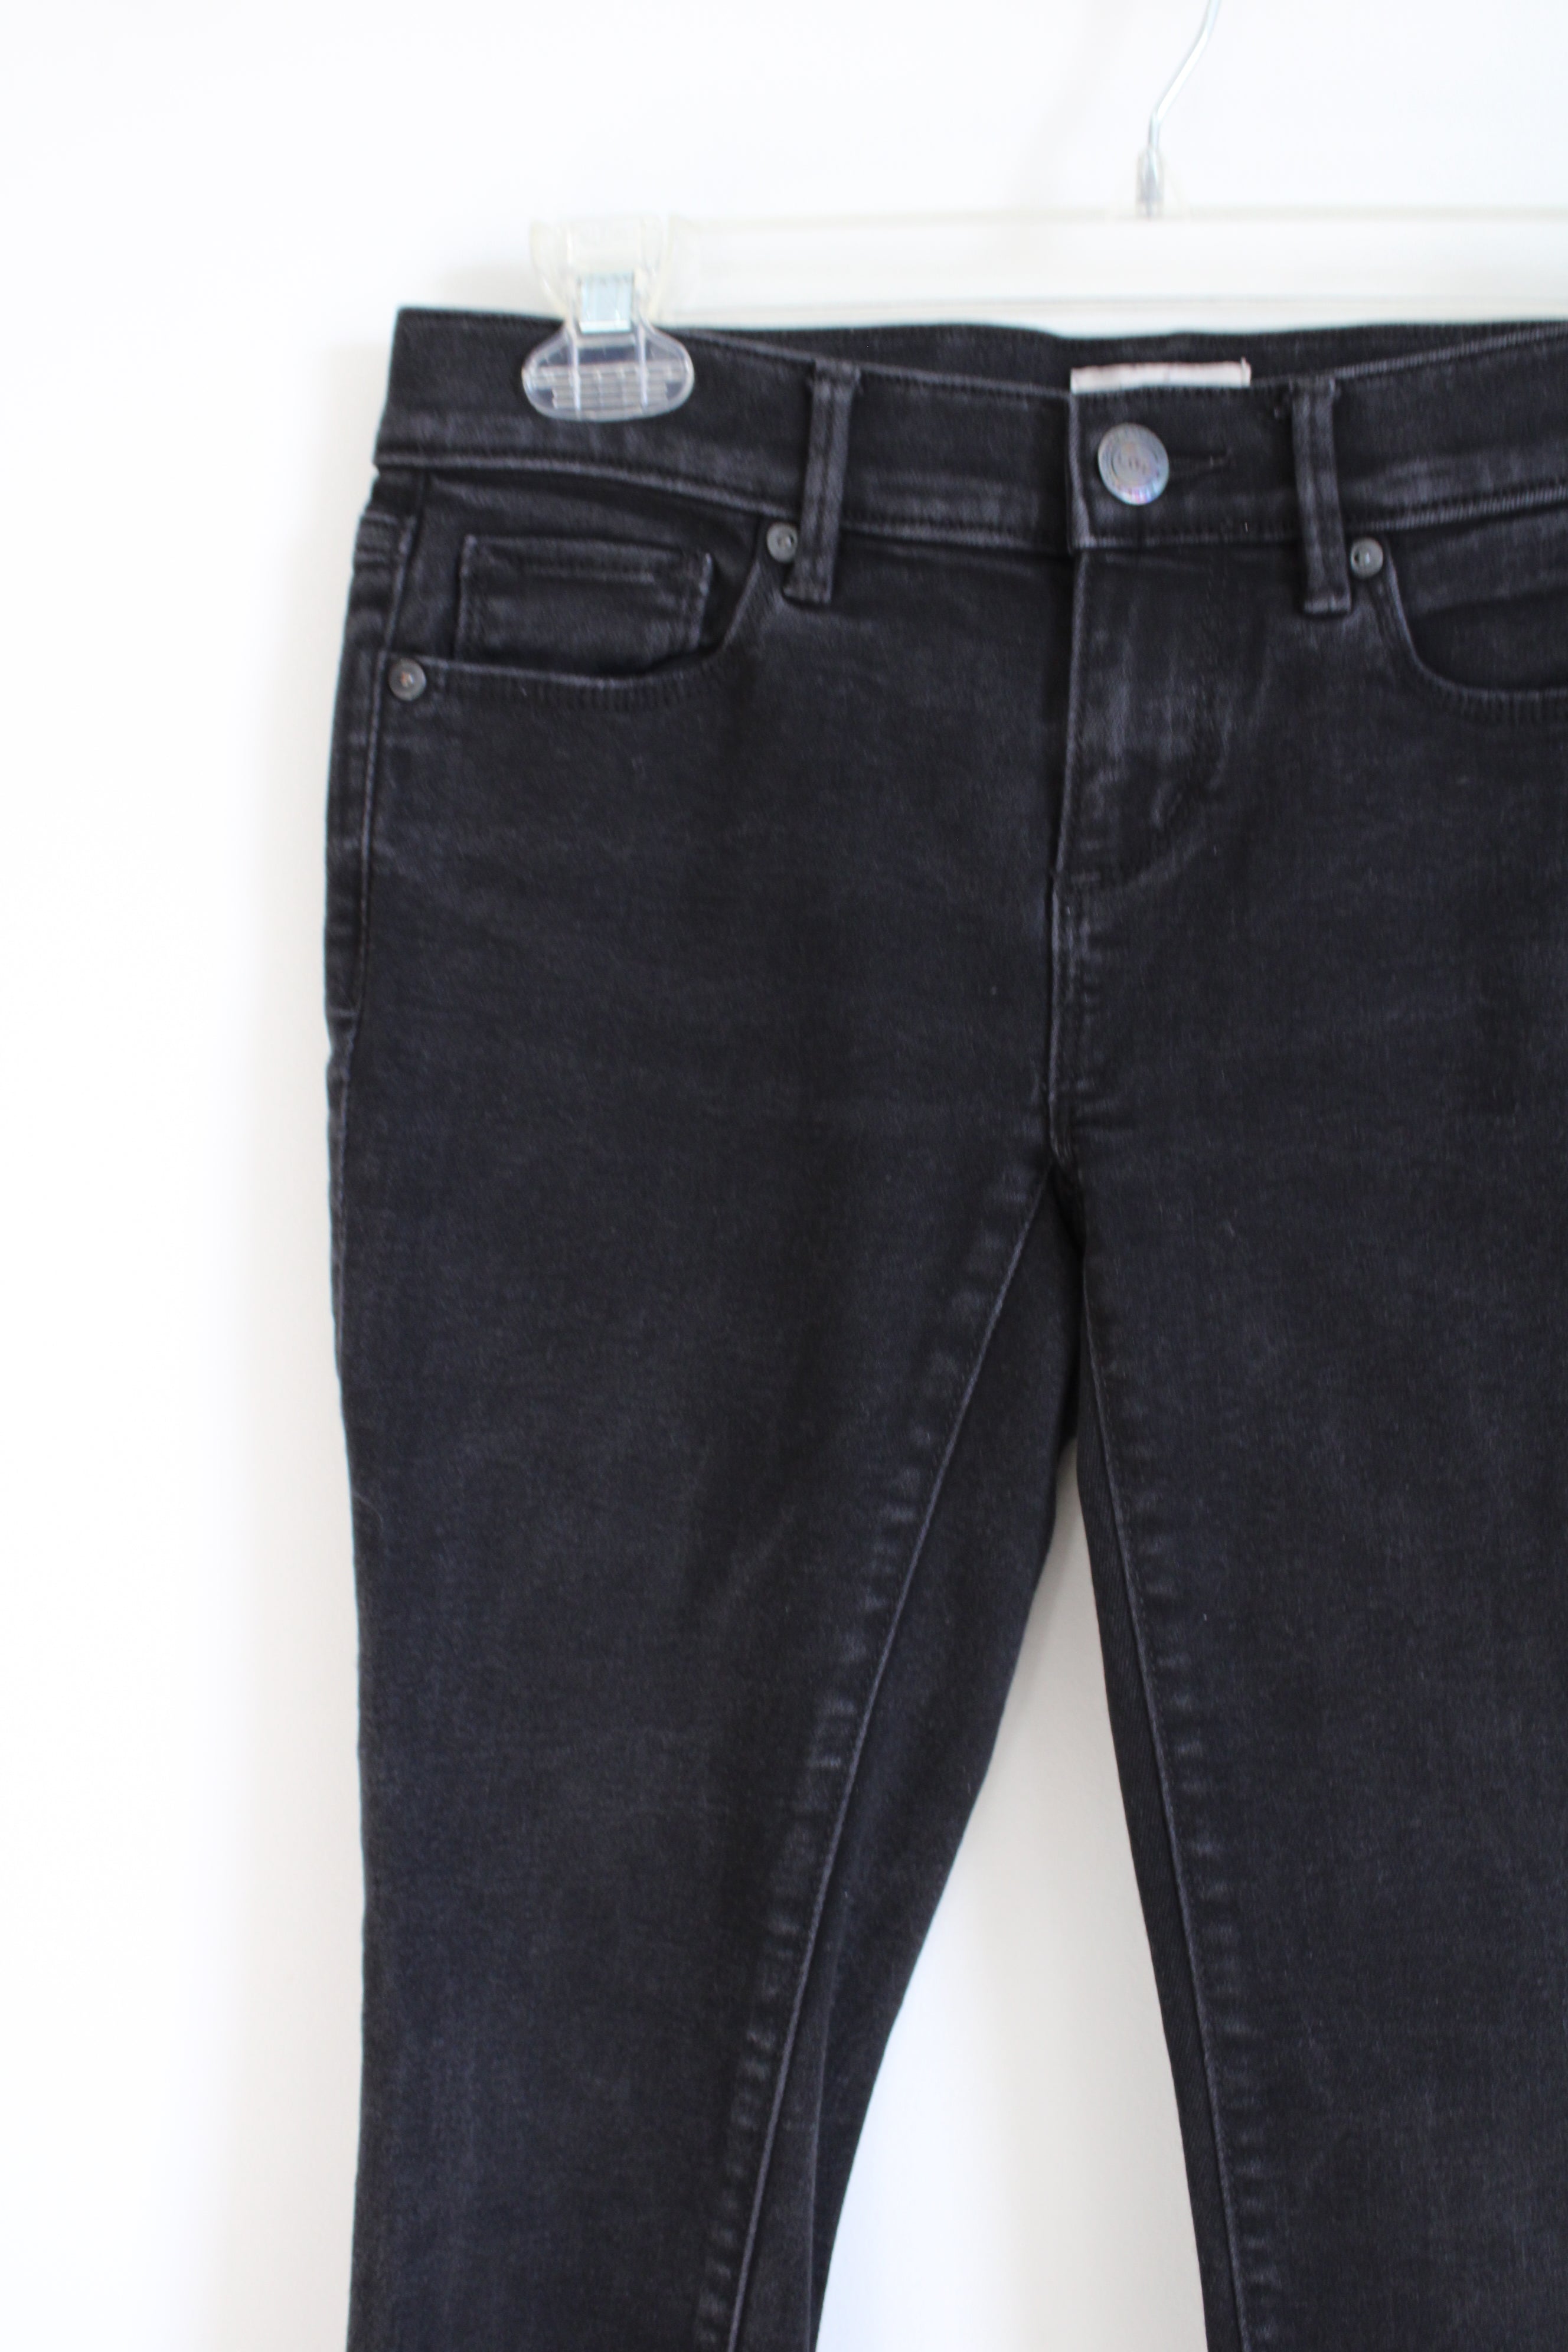 LOFT Modern Skinny Black Jeans | 0 Petite